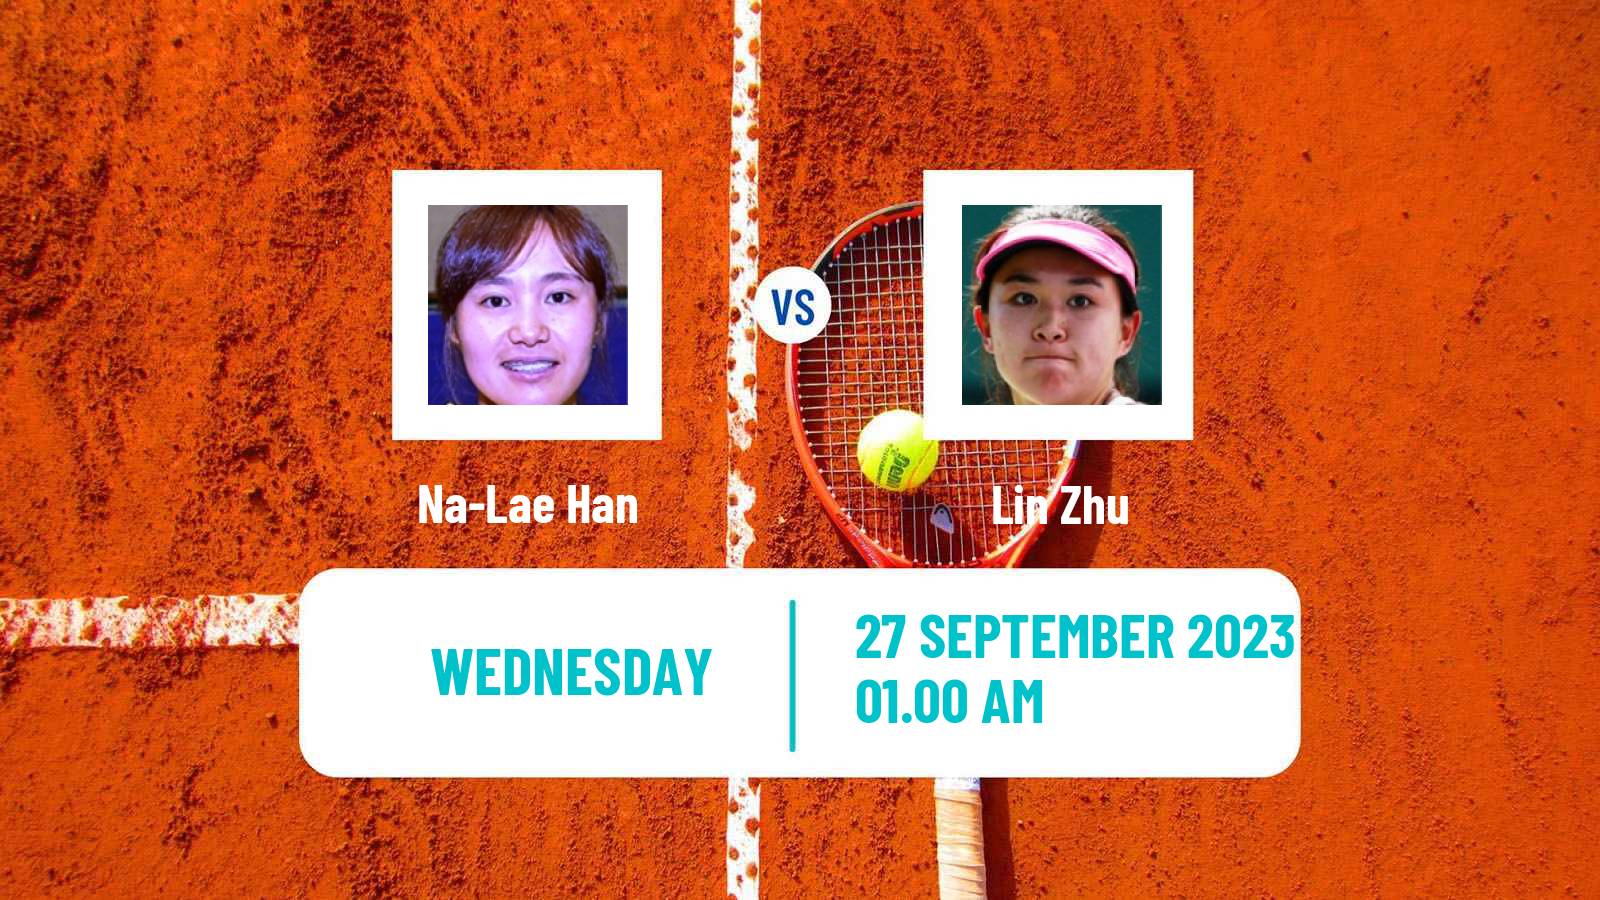 Tennis WTA Asian Games Na-Lae Han - Lin Zhu